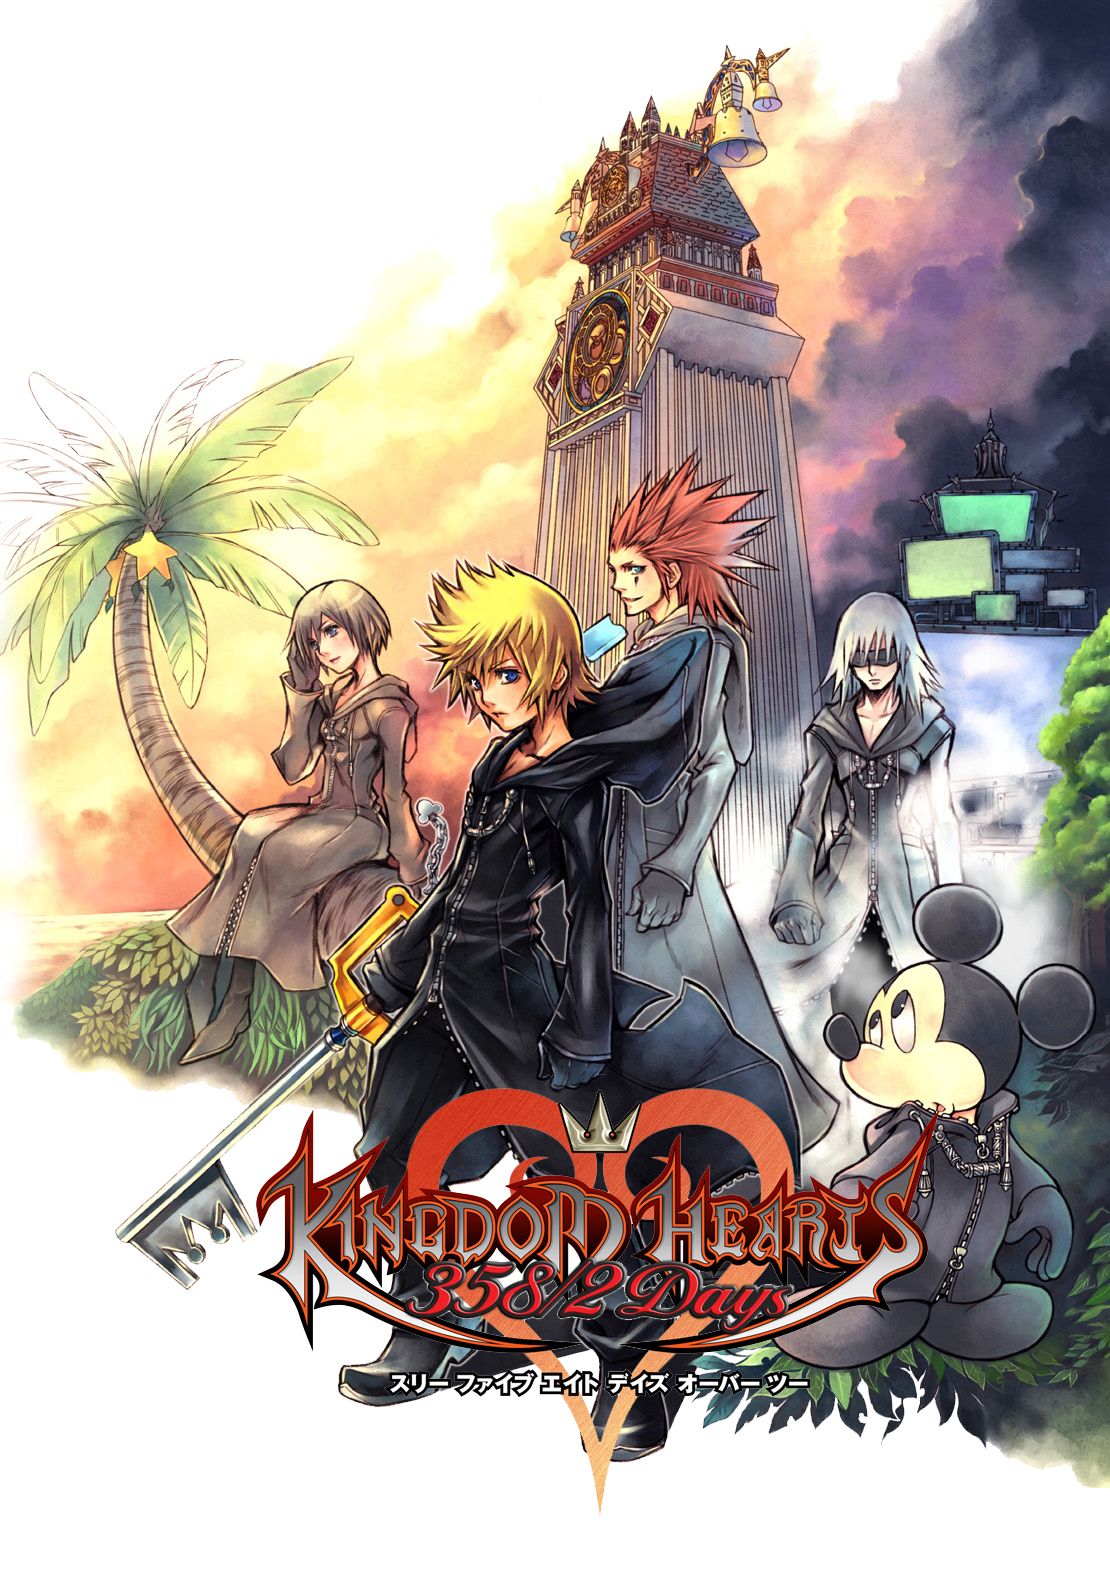 Kingdom Hearts 3582 Days Kingdom hearts games Kingdom hearts